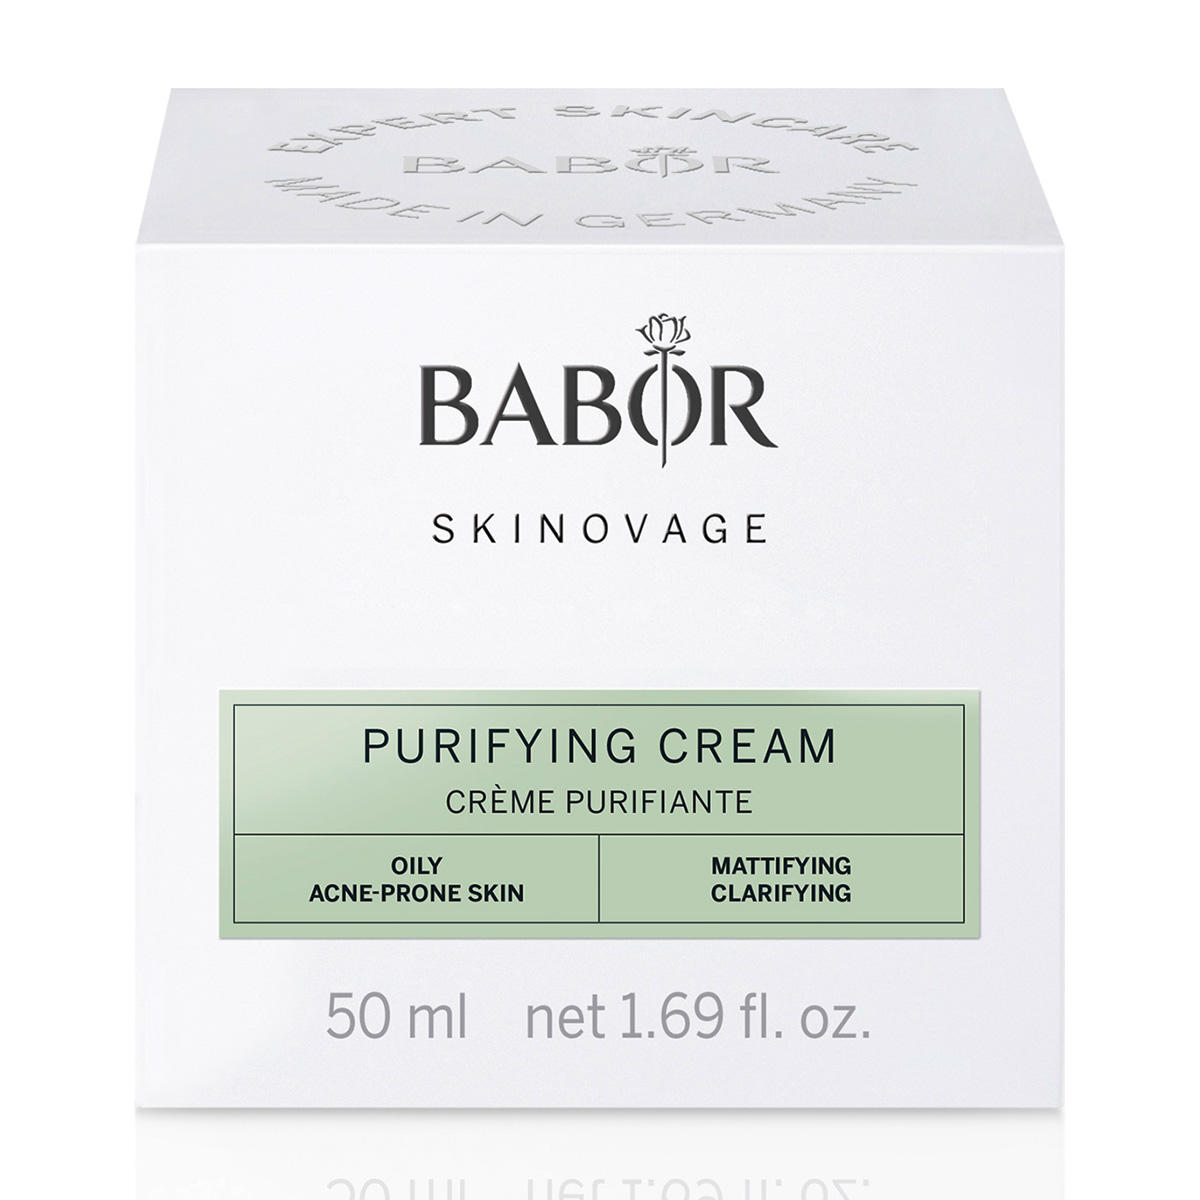 BABOR SKINOVAGE Purifying Cream 50 ml - 2